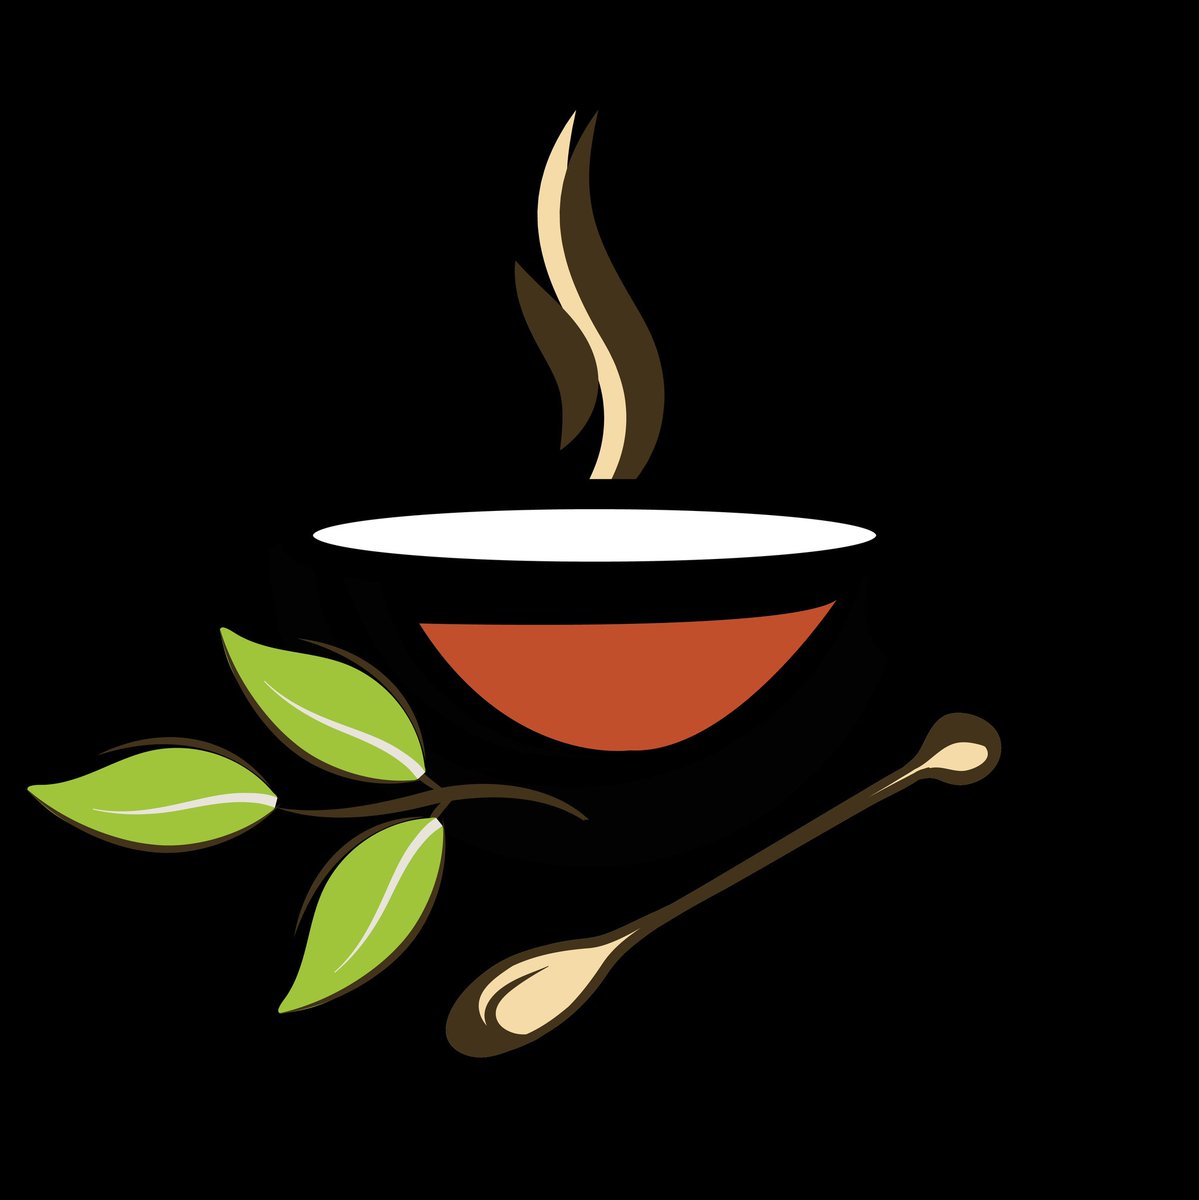 #NewProfilePic
Orkosu Organic Herbal Teas
#Salonetwitter 
#herbalteas #organicfood #immunesystemboosters #goodhealth
#madeinsierraleone
#entrepreneursinAfrica